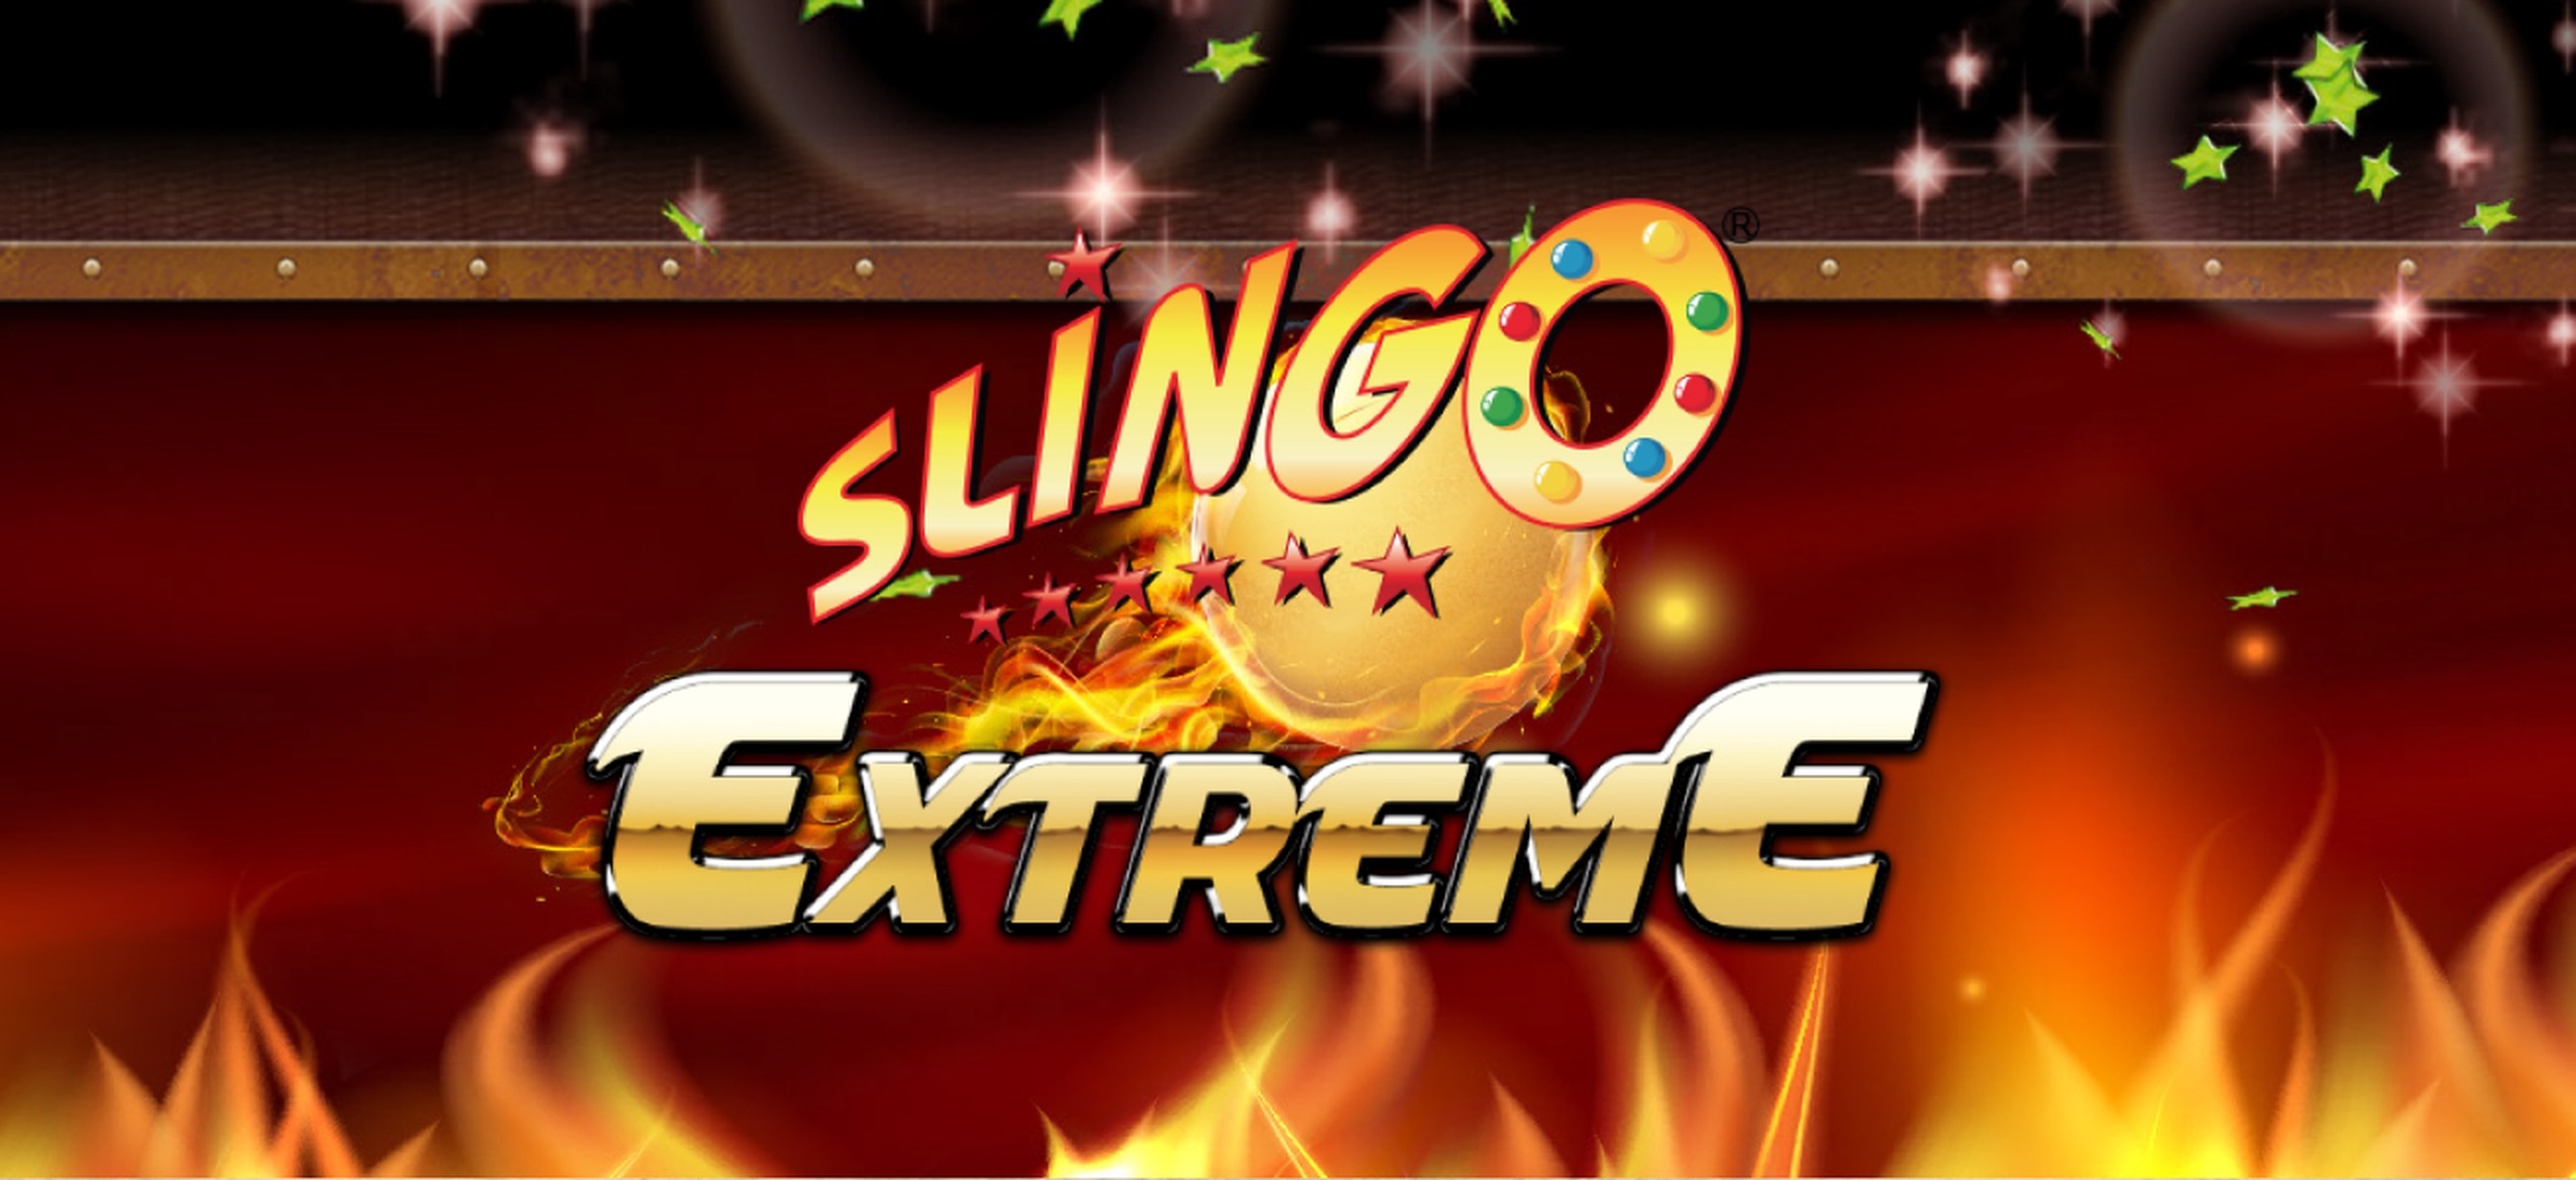 The Slingo Extreme Online Slot Demo Game by Slingo